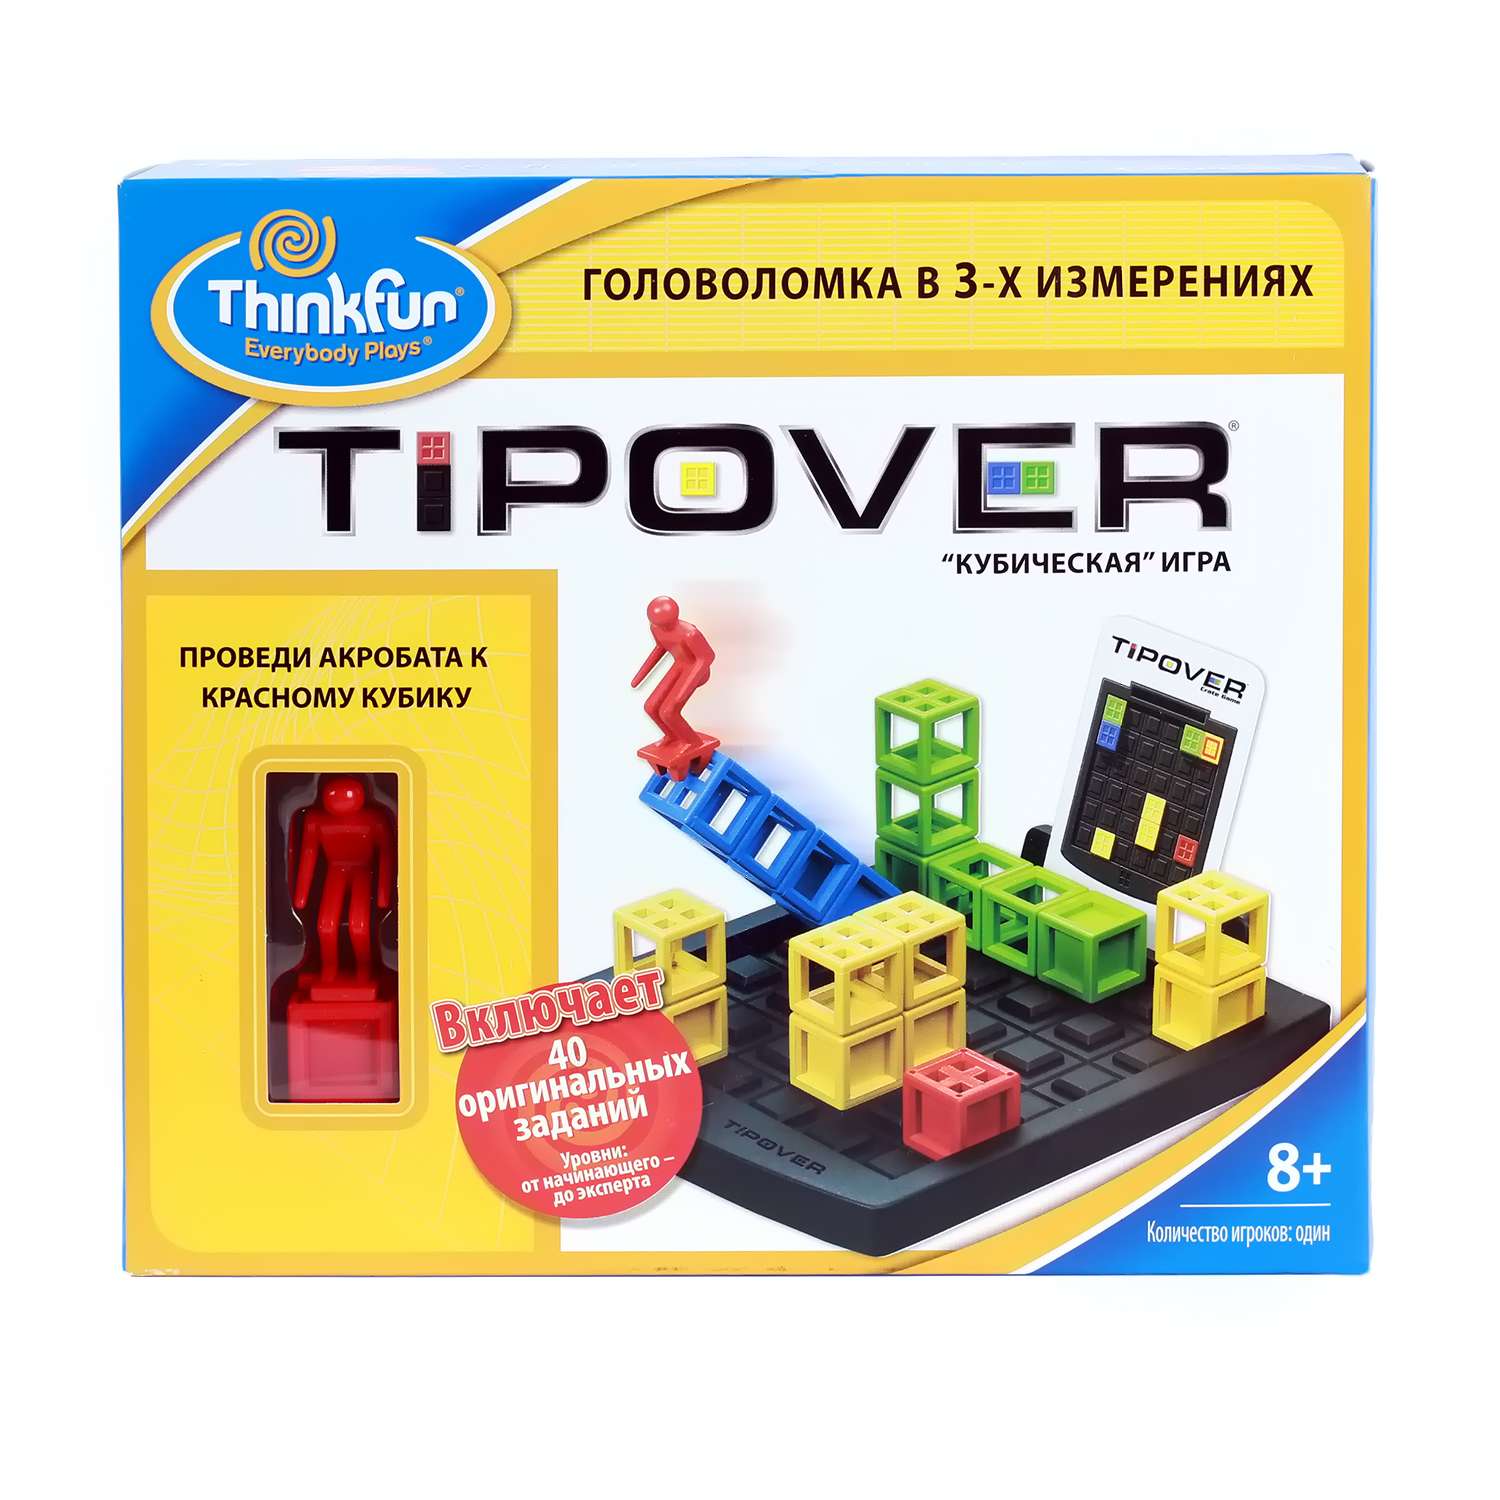 Кубическая головоломка Thinkfun Tipover - фото 1